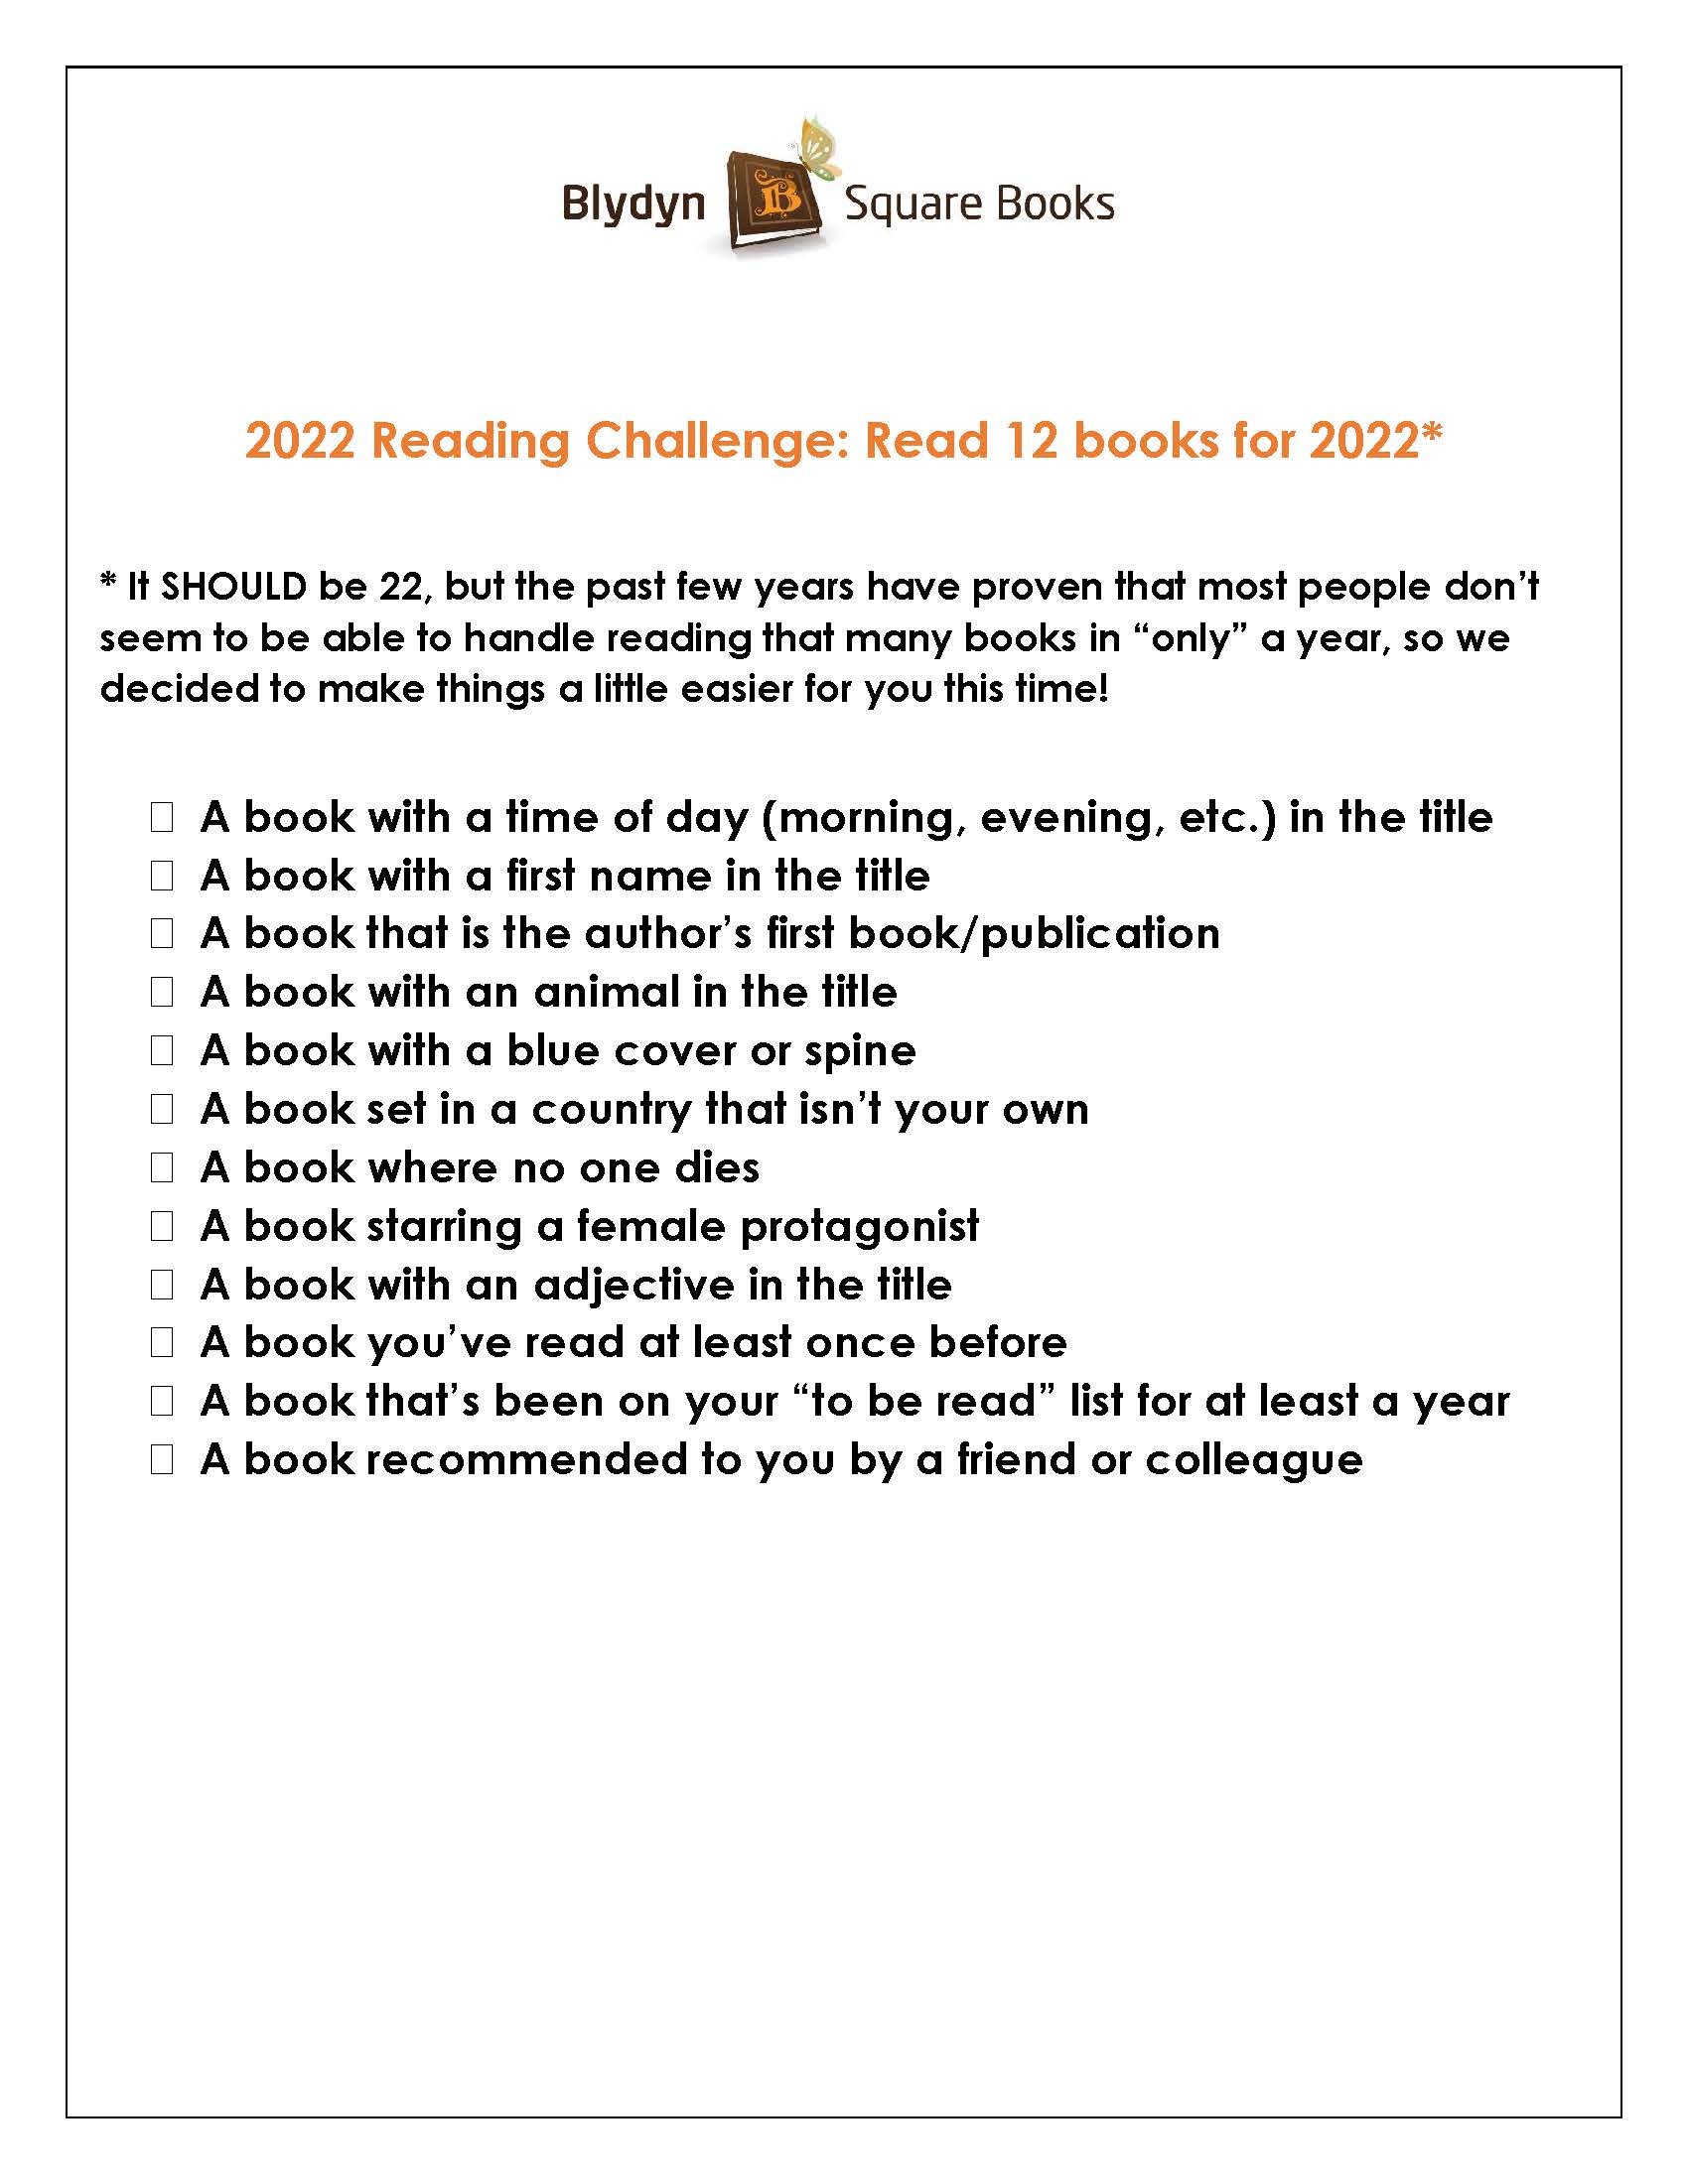 2022 Reading Challenge List – Blydyn Square Books